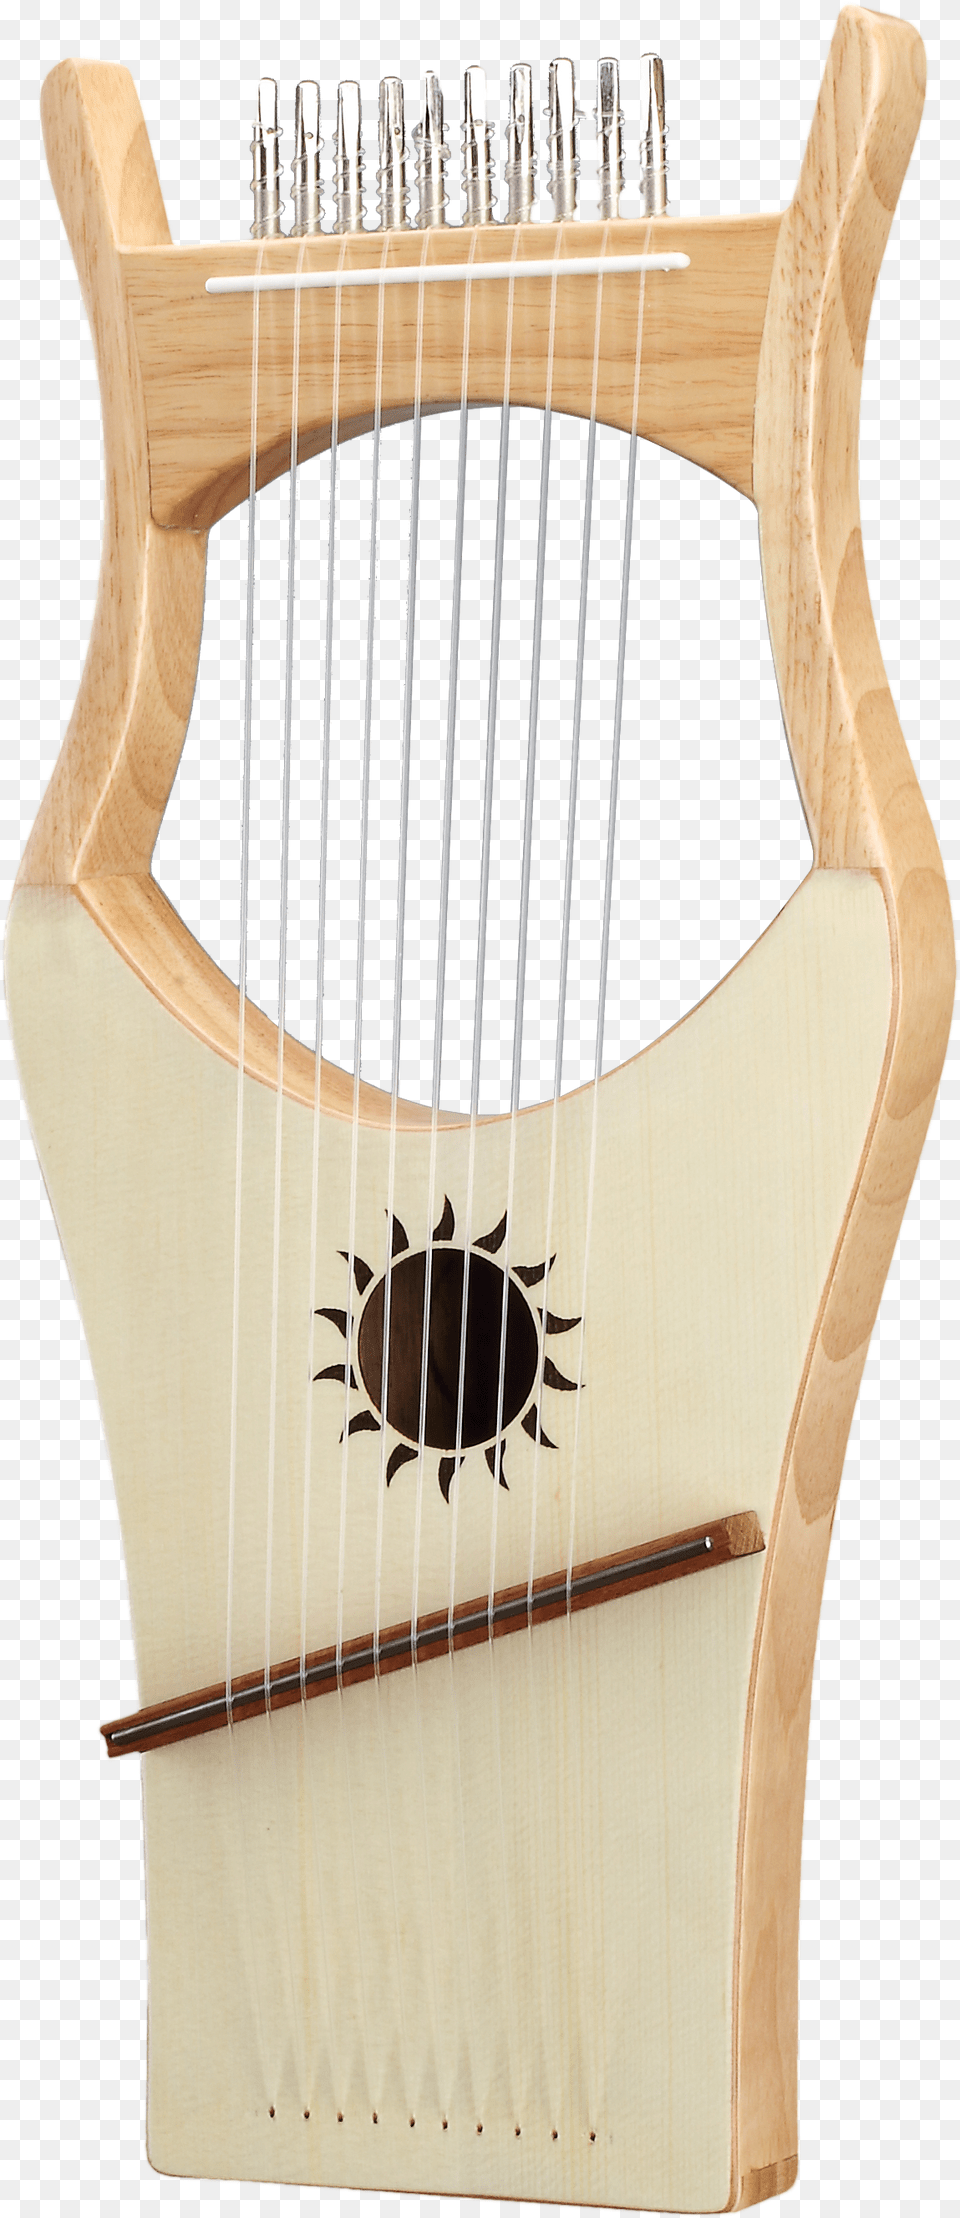 Wood, Musical Instrument, Guitar, Harp, Lyre Png Image